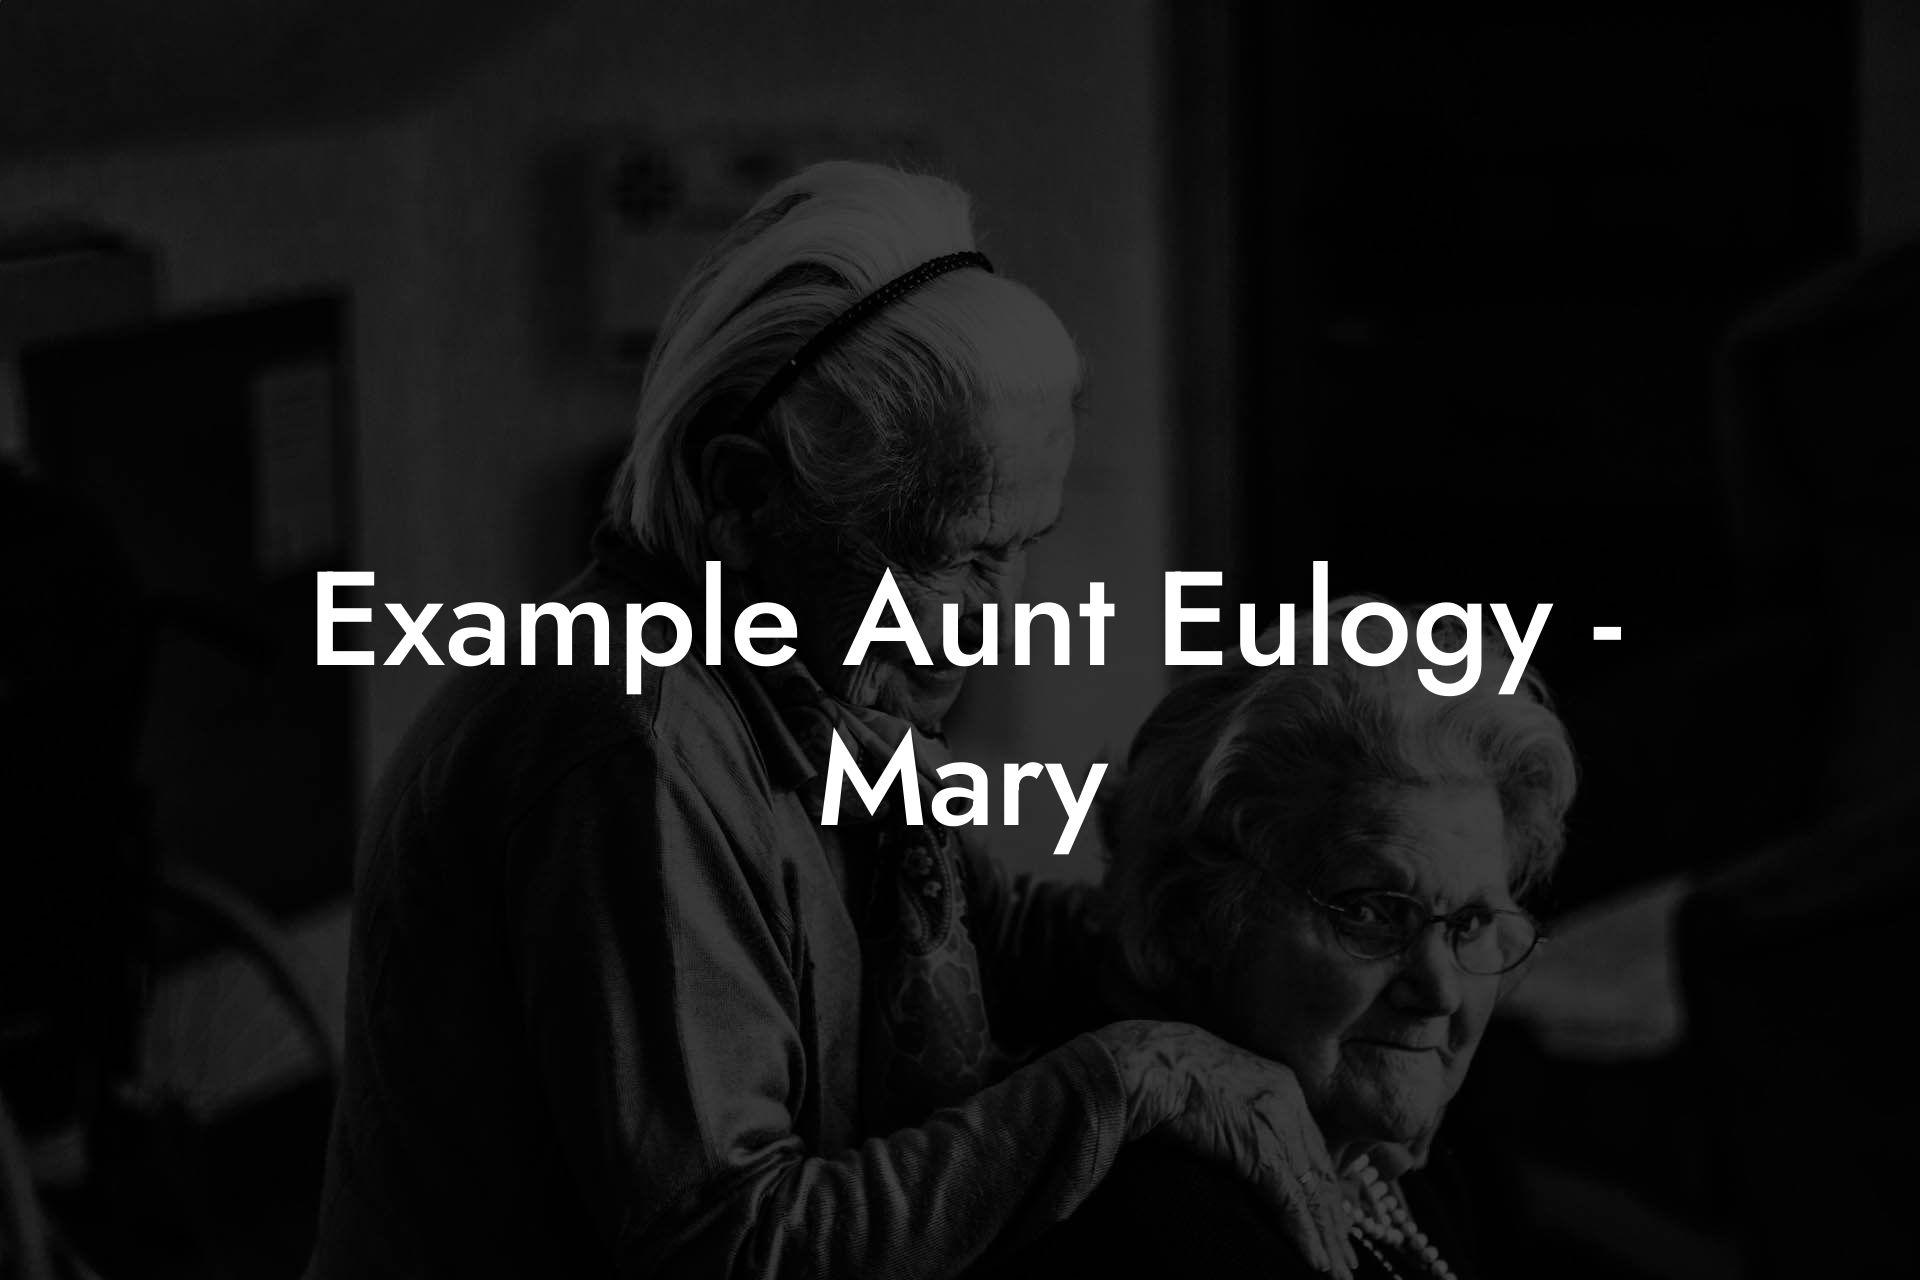 Example Aunt Eulogy - Mary